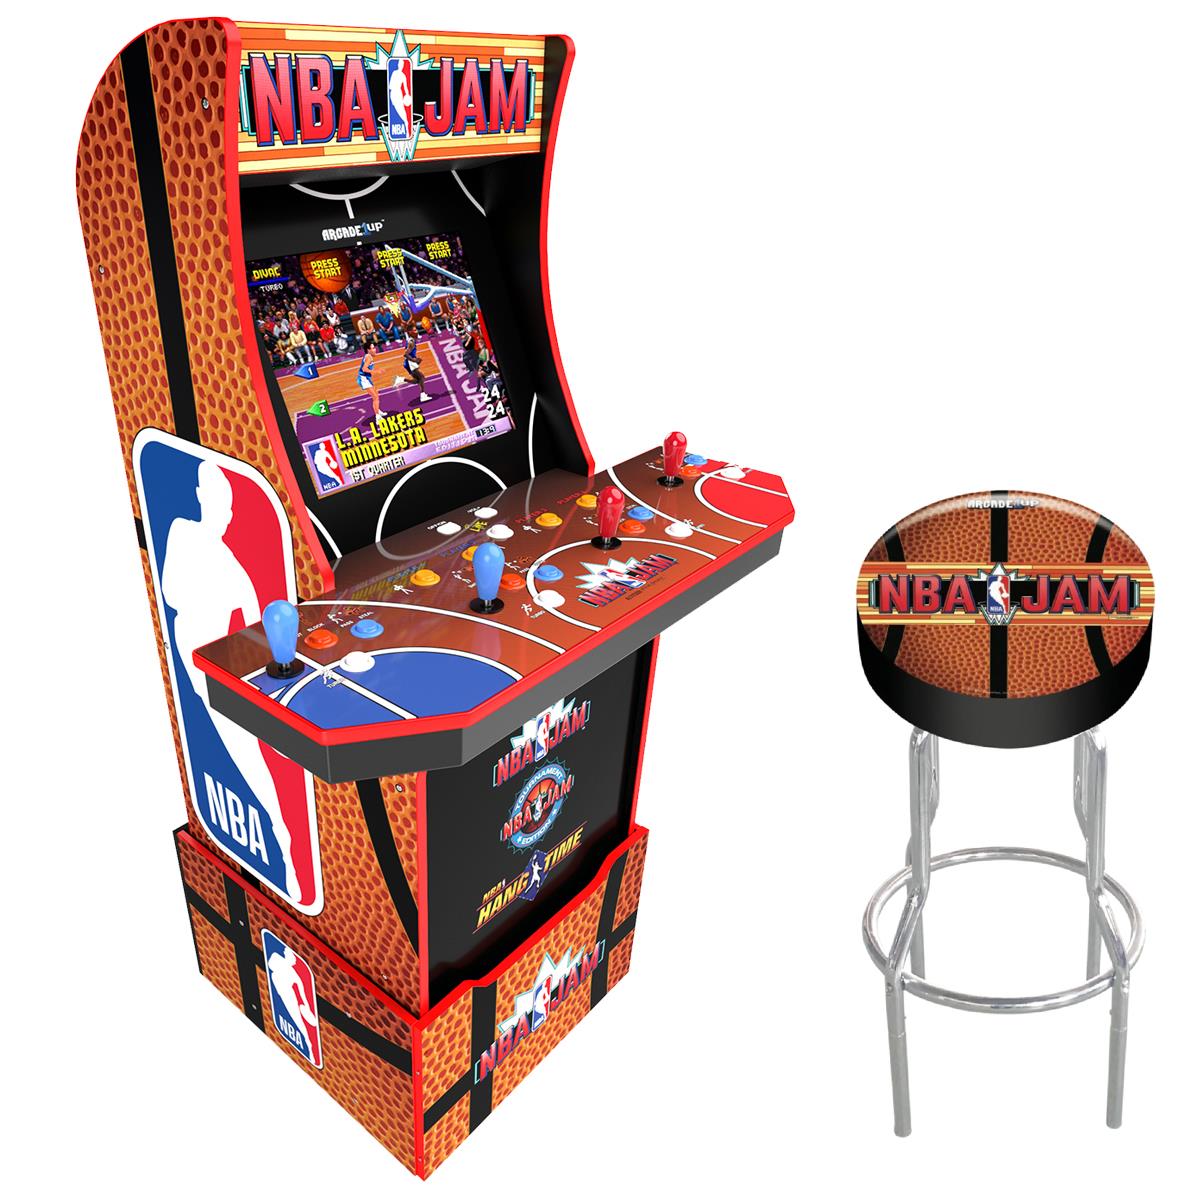 turbo time arcade game